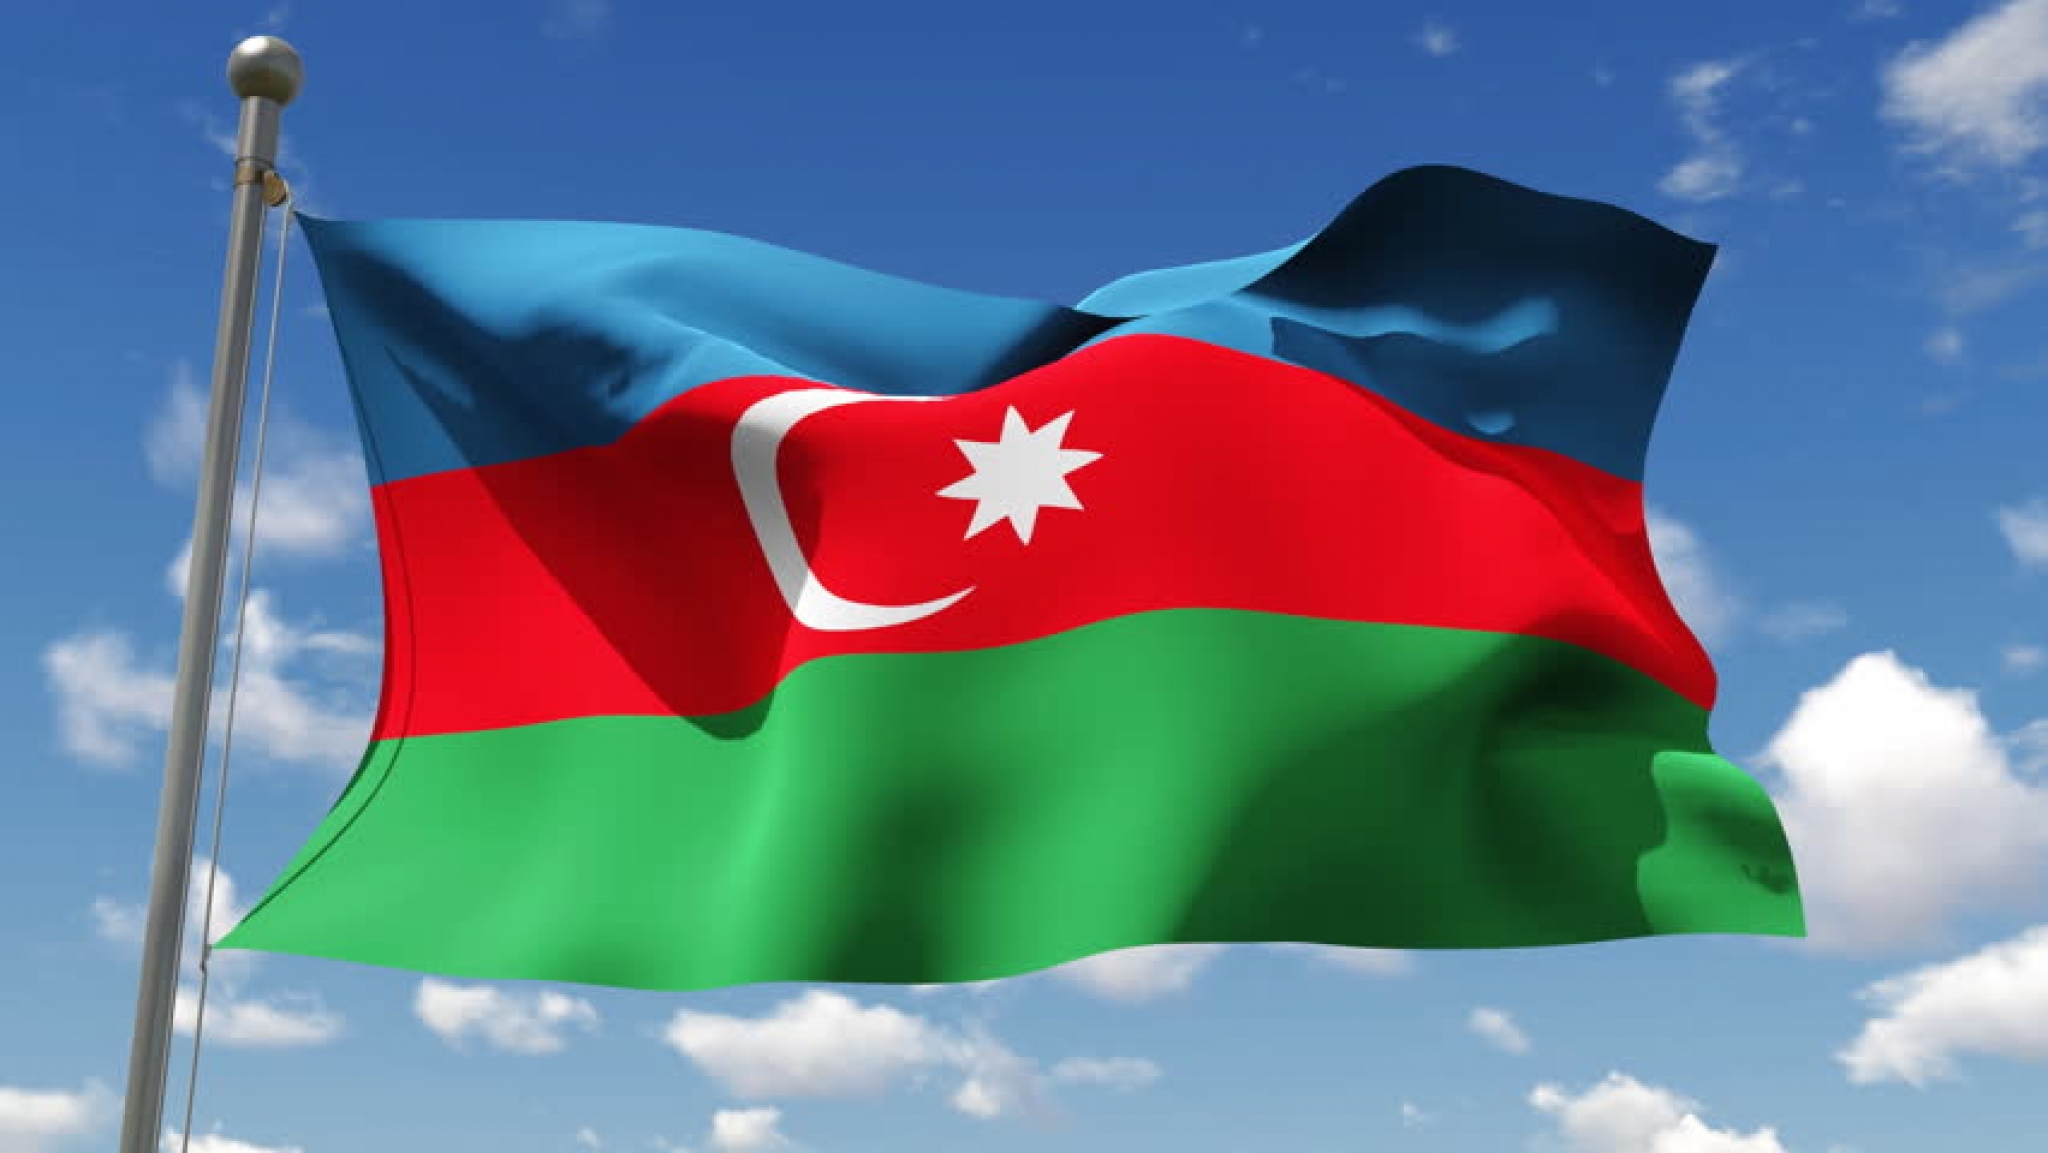 dien mung quoc khanh azerbaijan